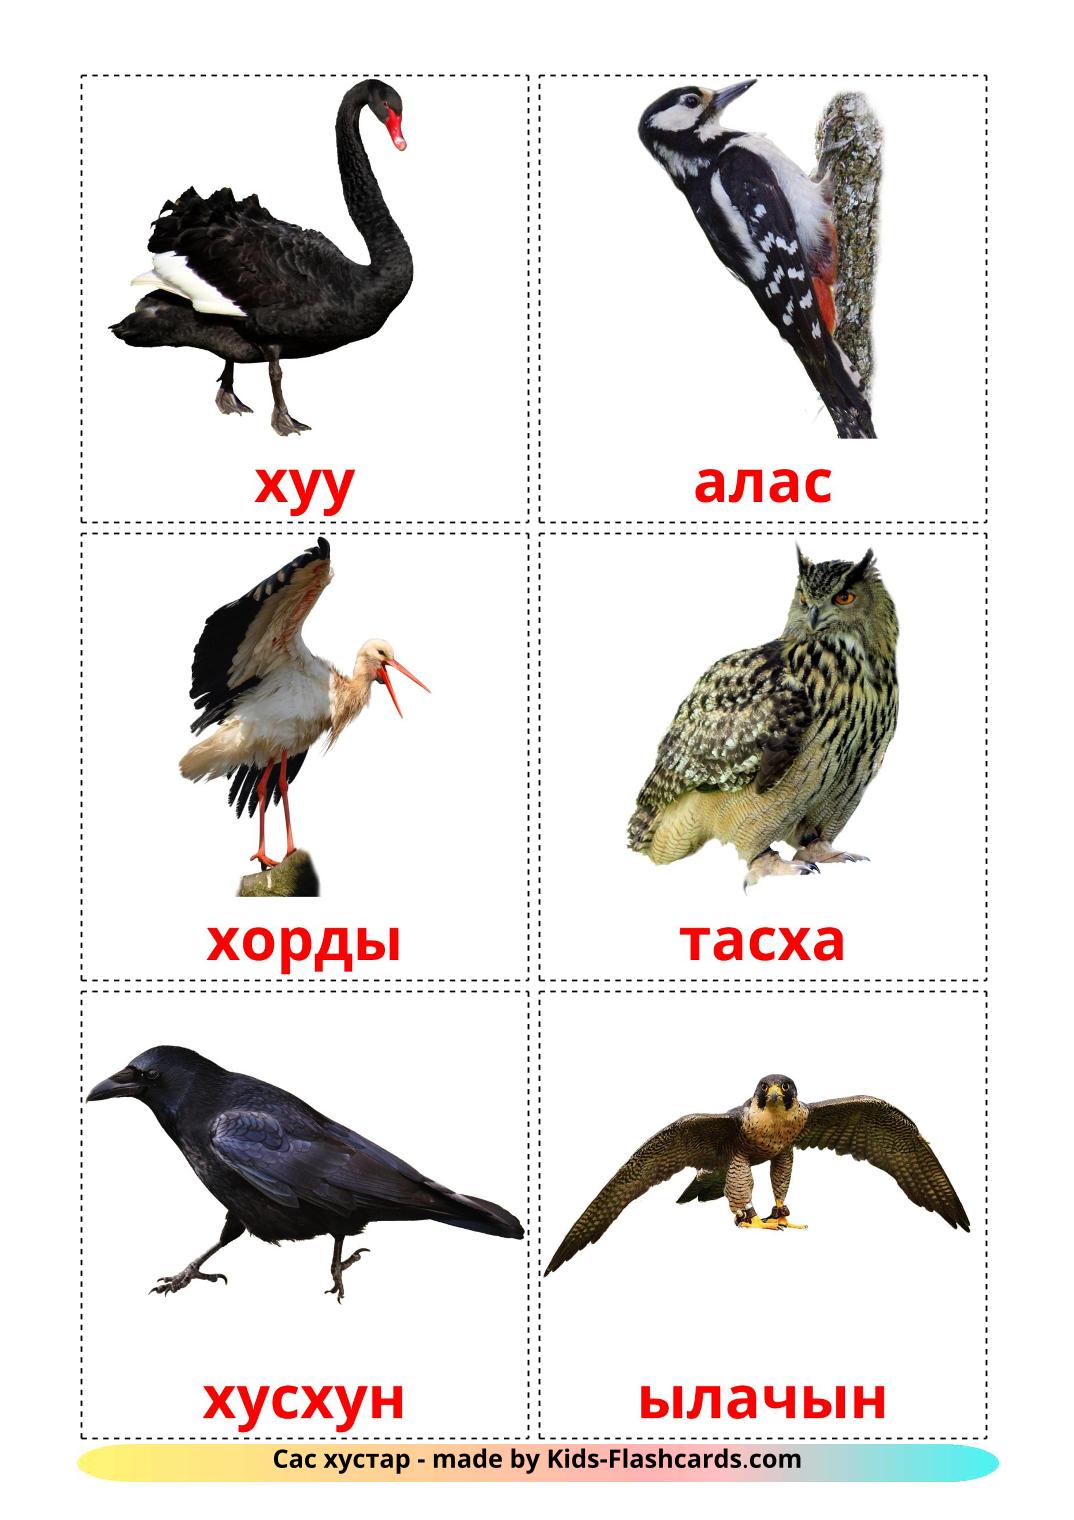 Pájaros salvajes - 17 fichas de kirguís para imprimir gratis 